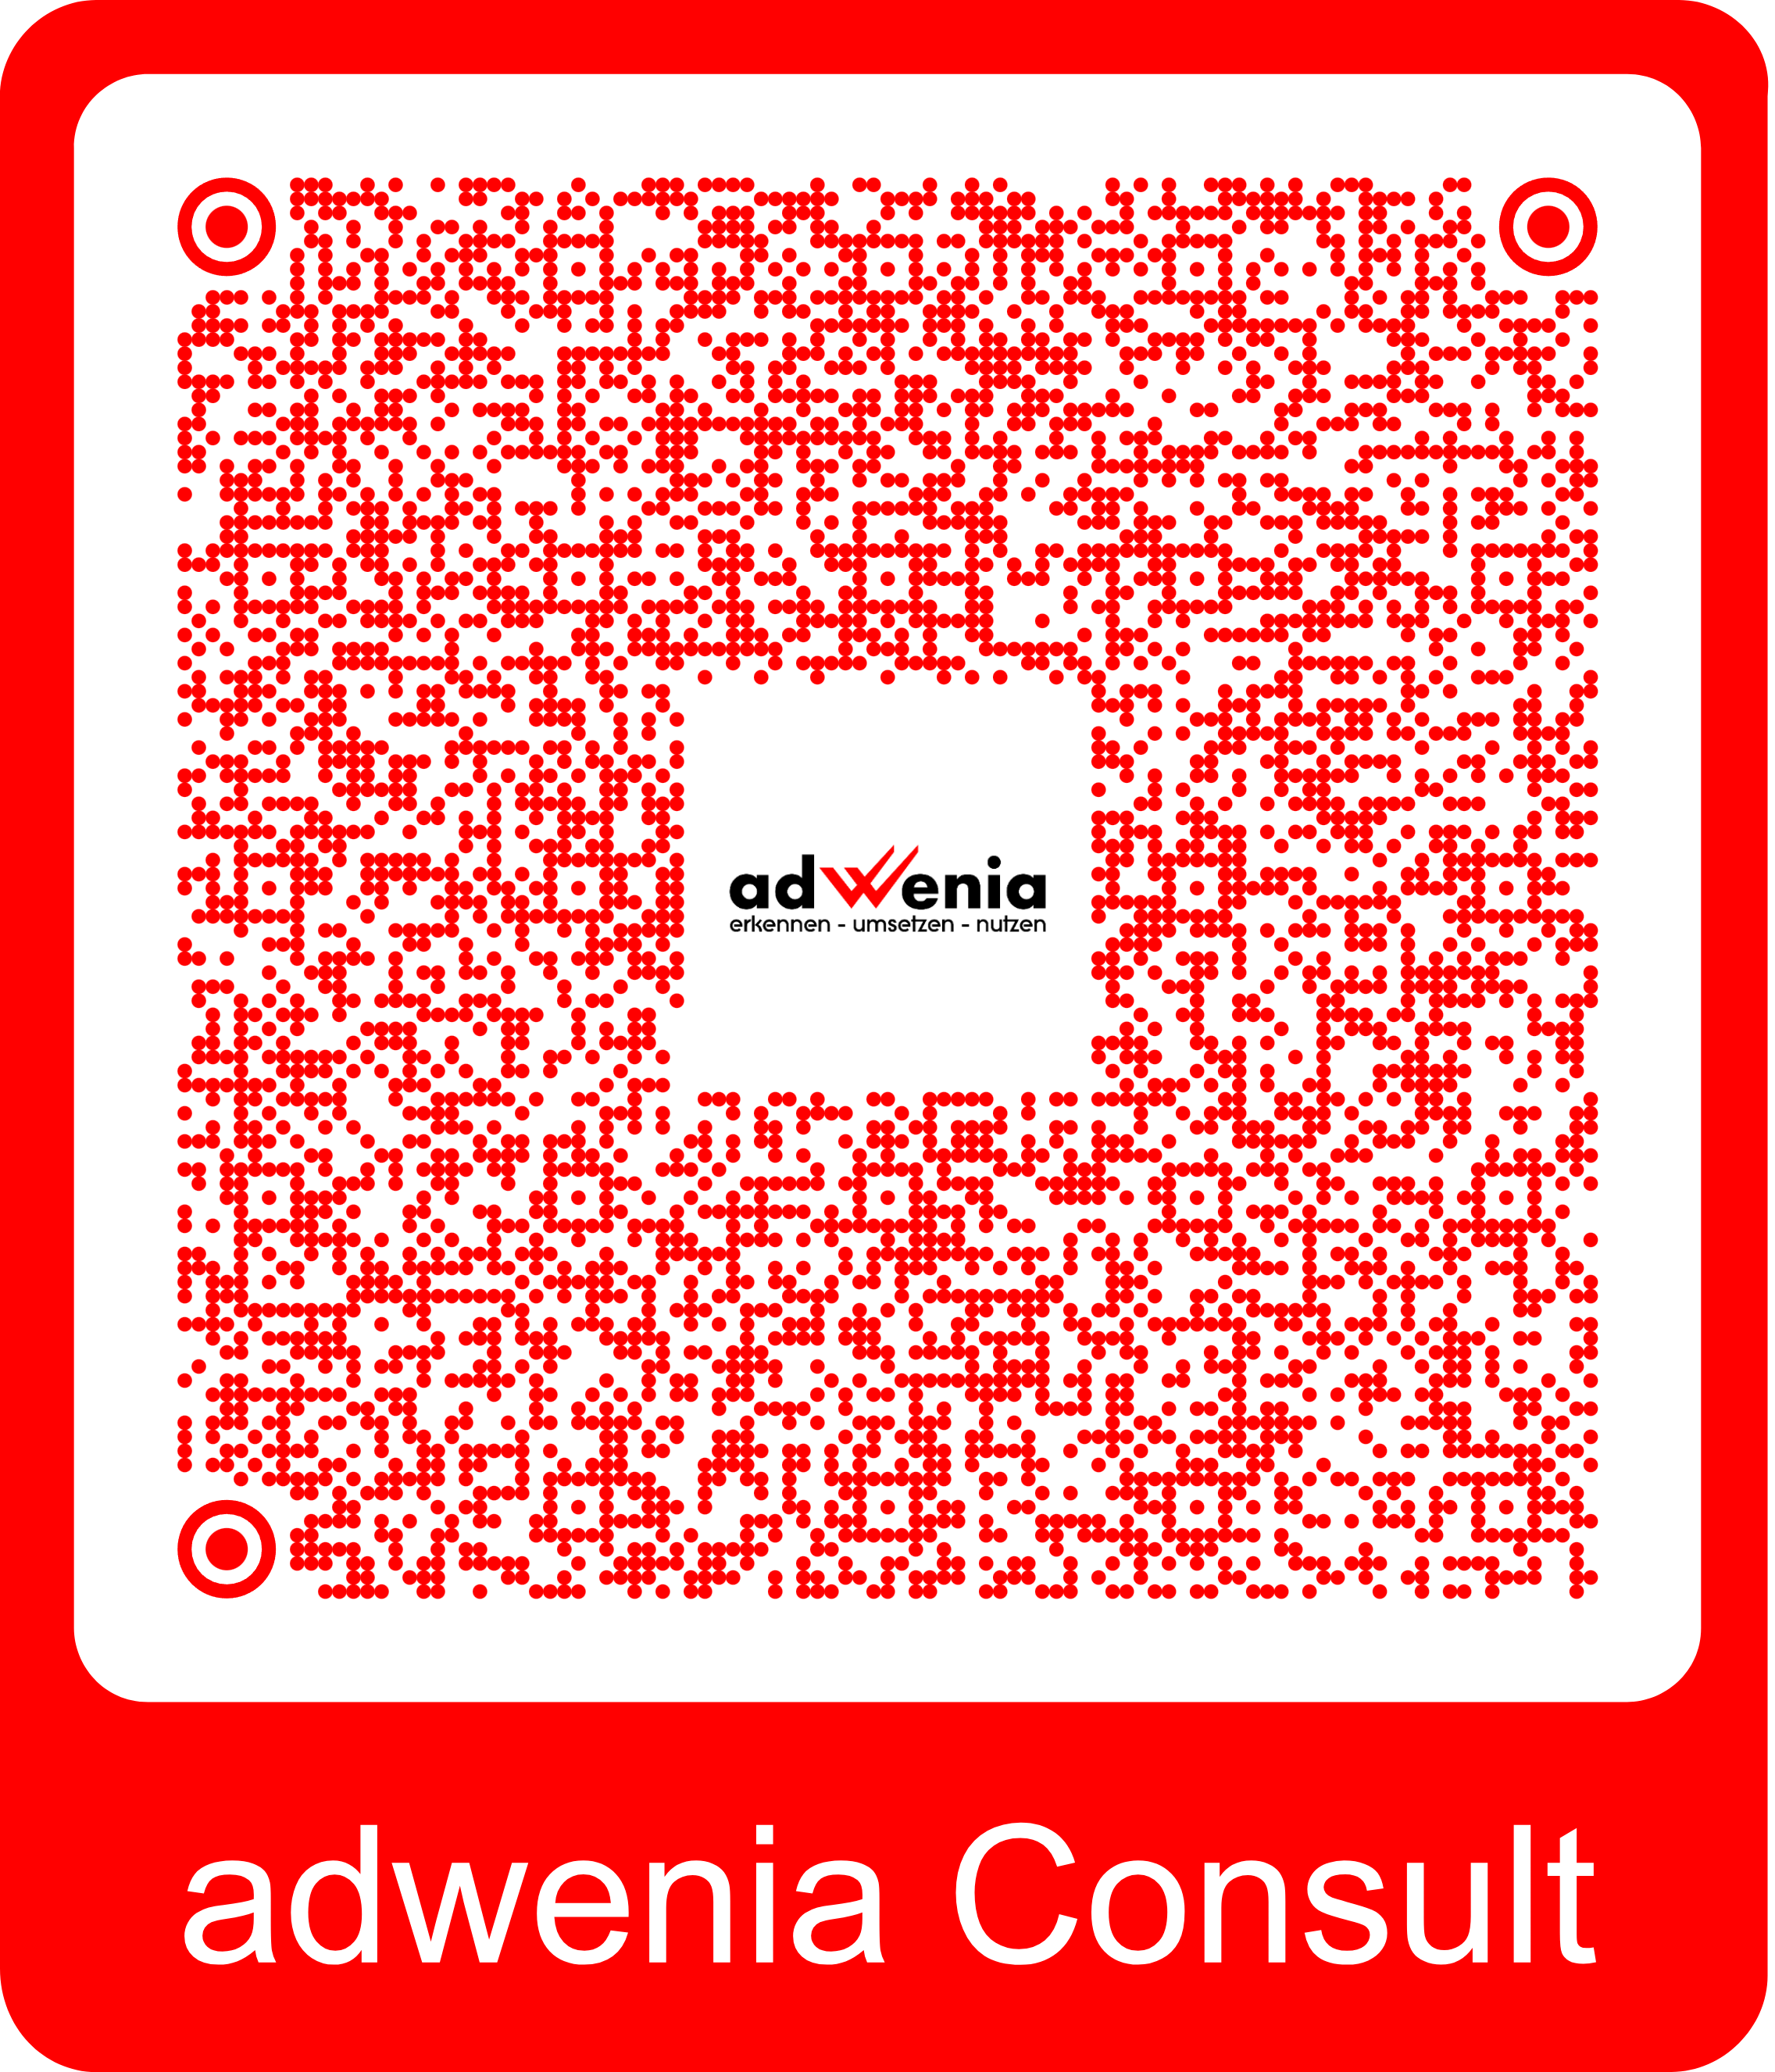 adwenia - Business Card